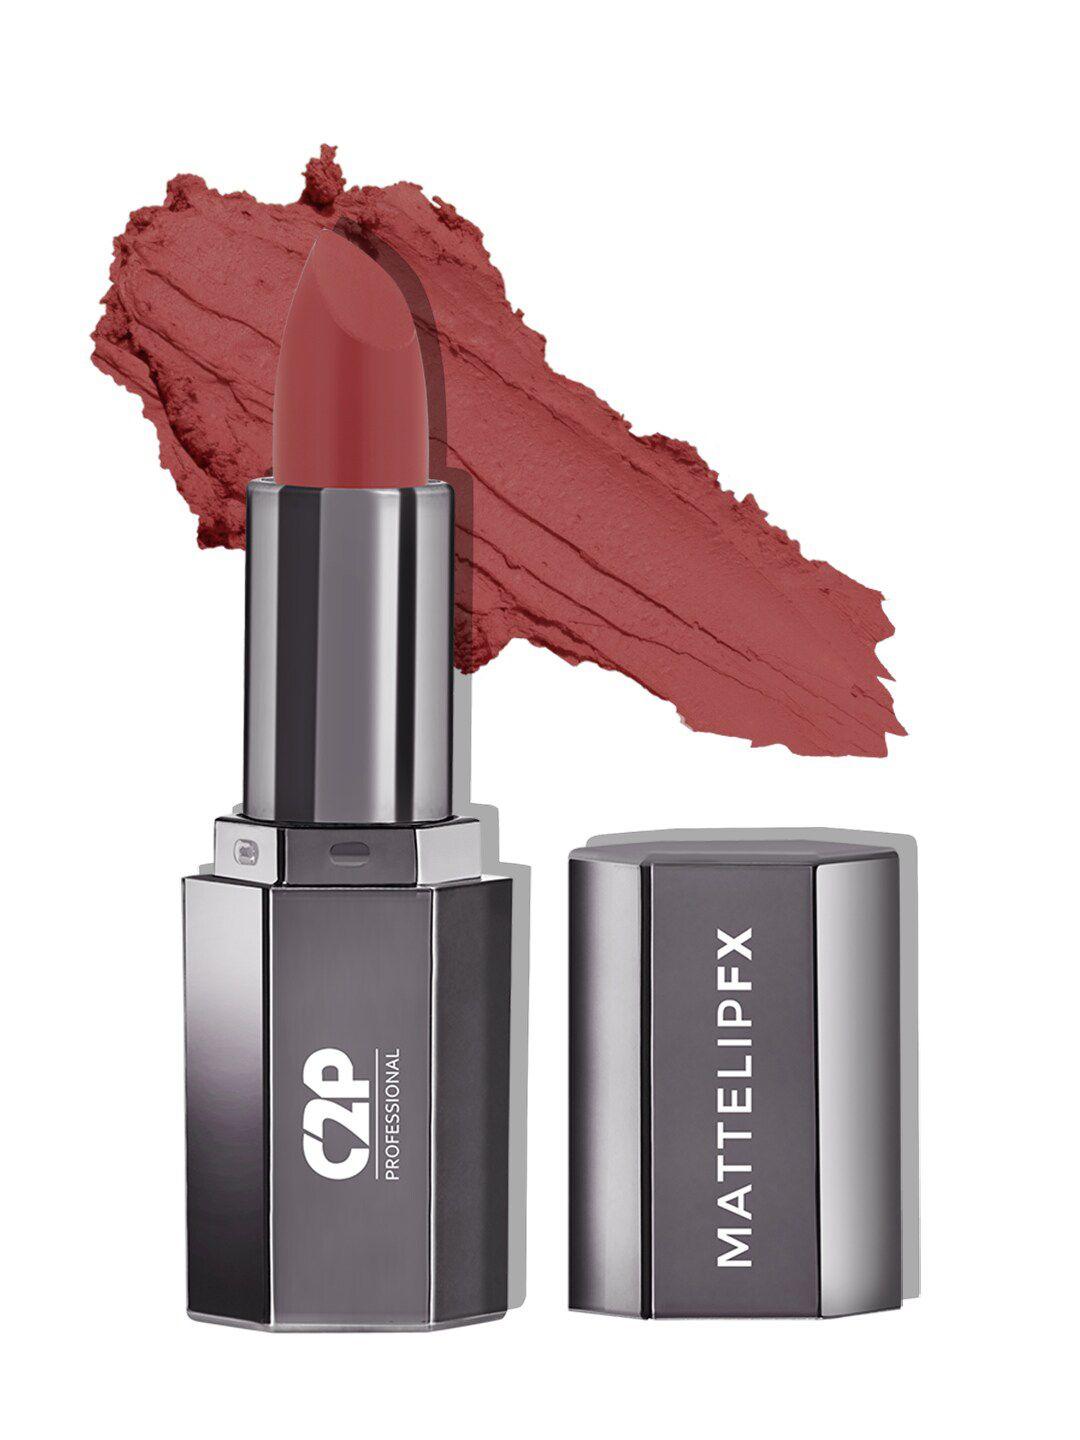 c2p professional makeup mattelipfx long-lasting lipstick - coffee addict 33